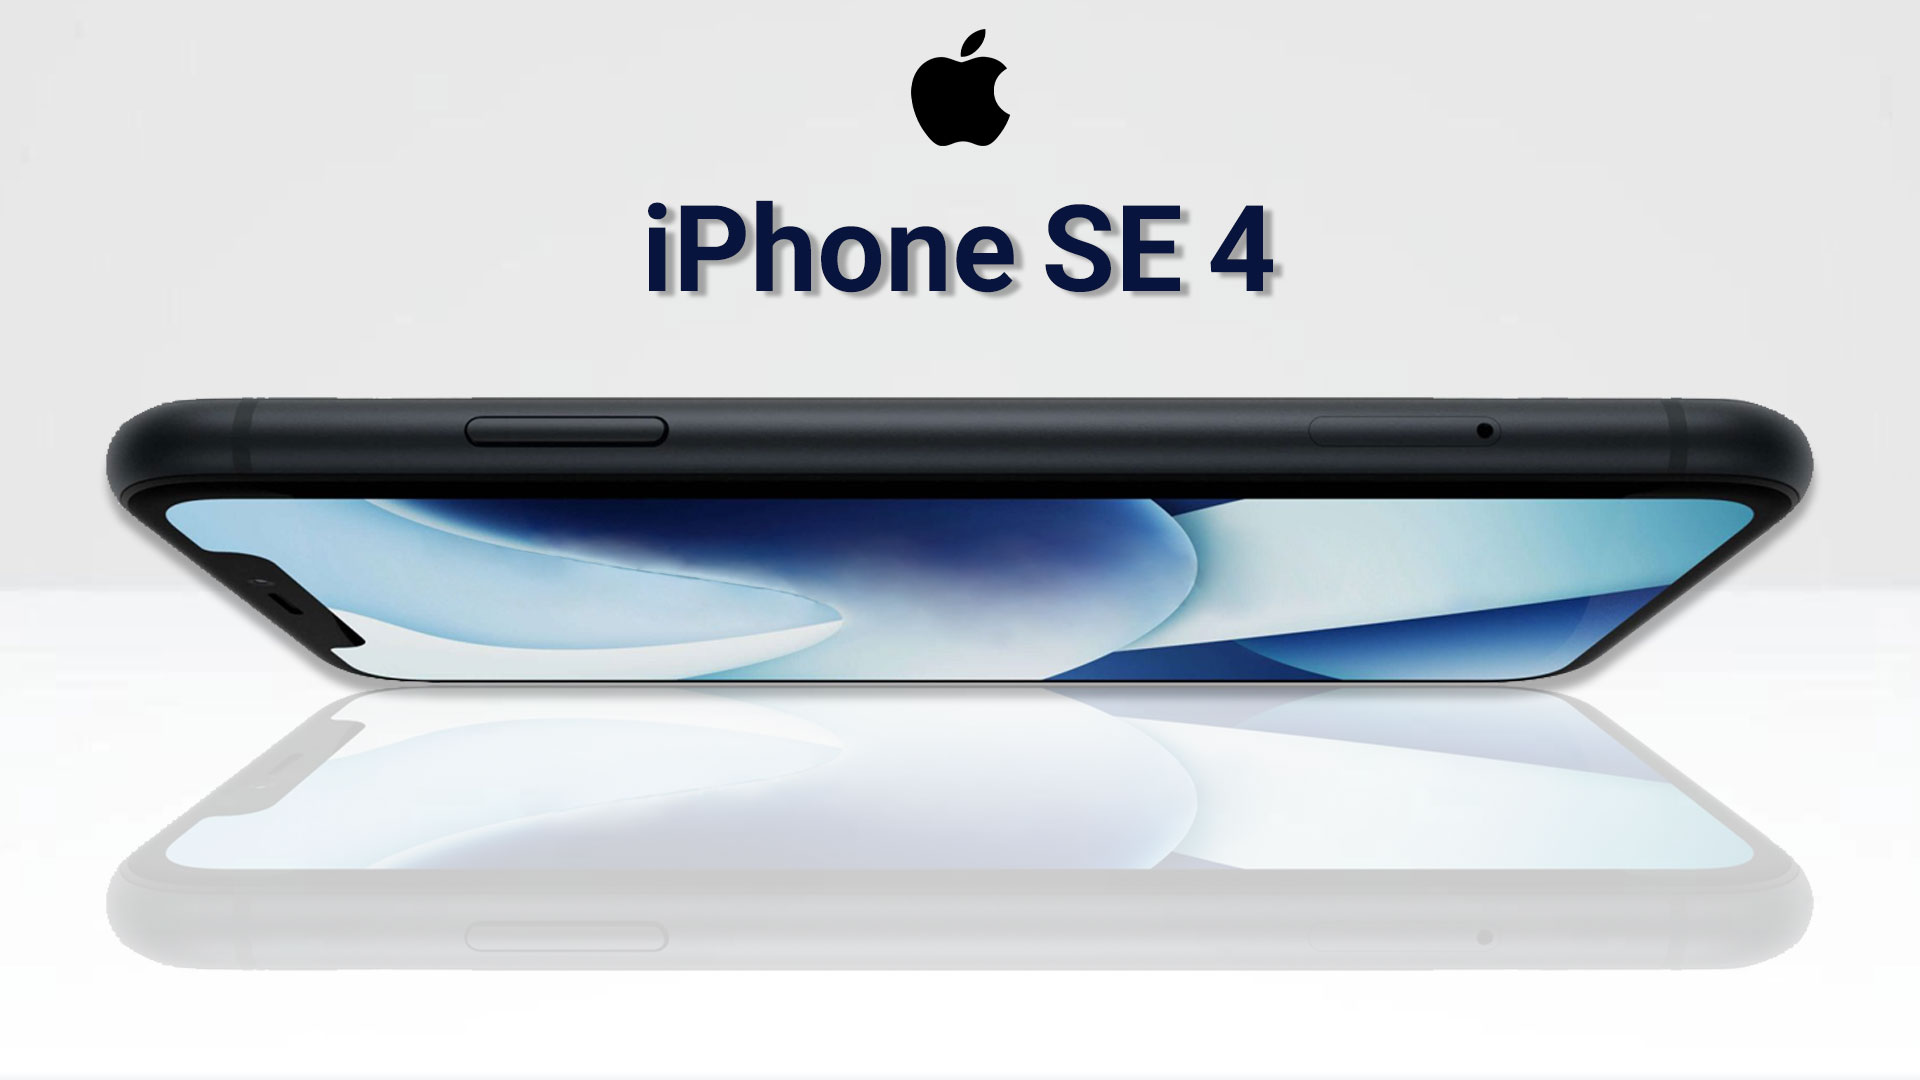 iphone SE 4 display